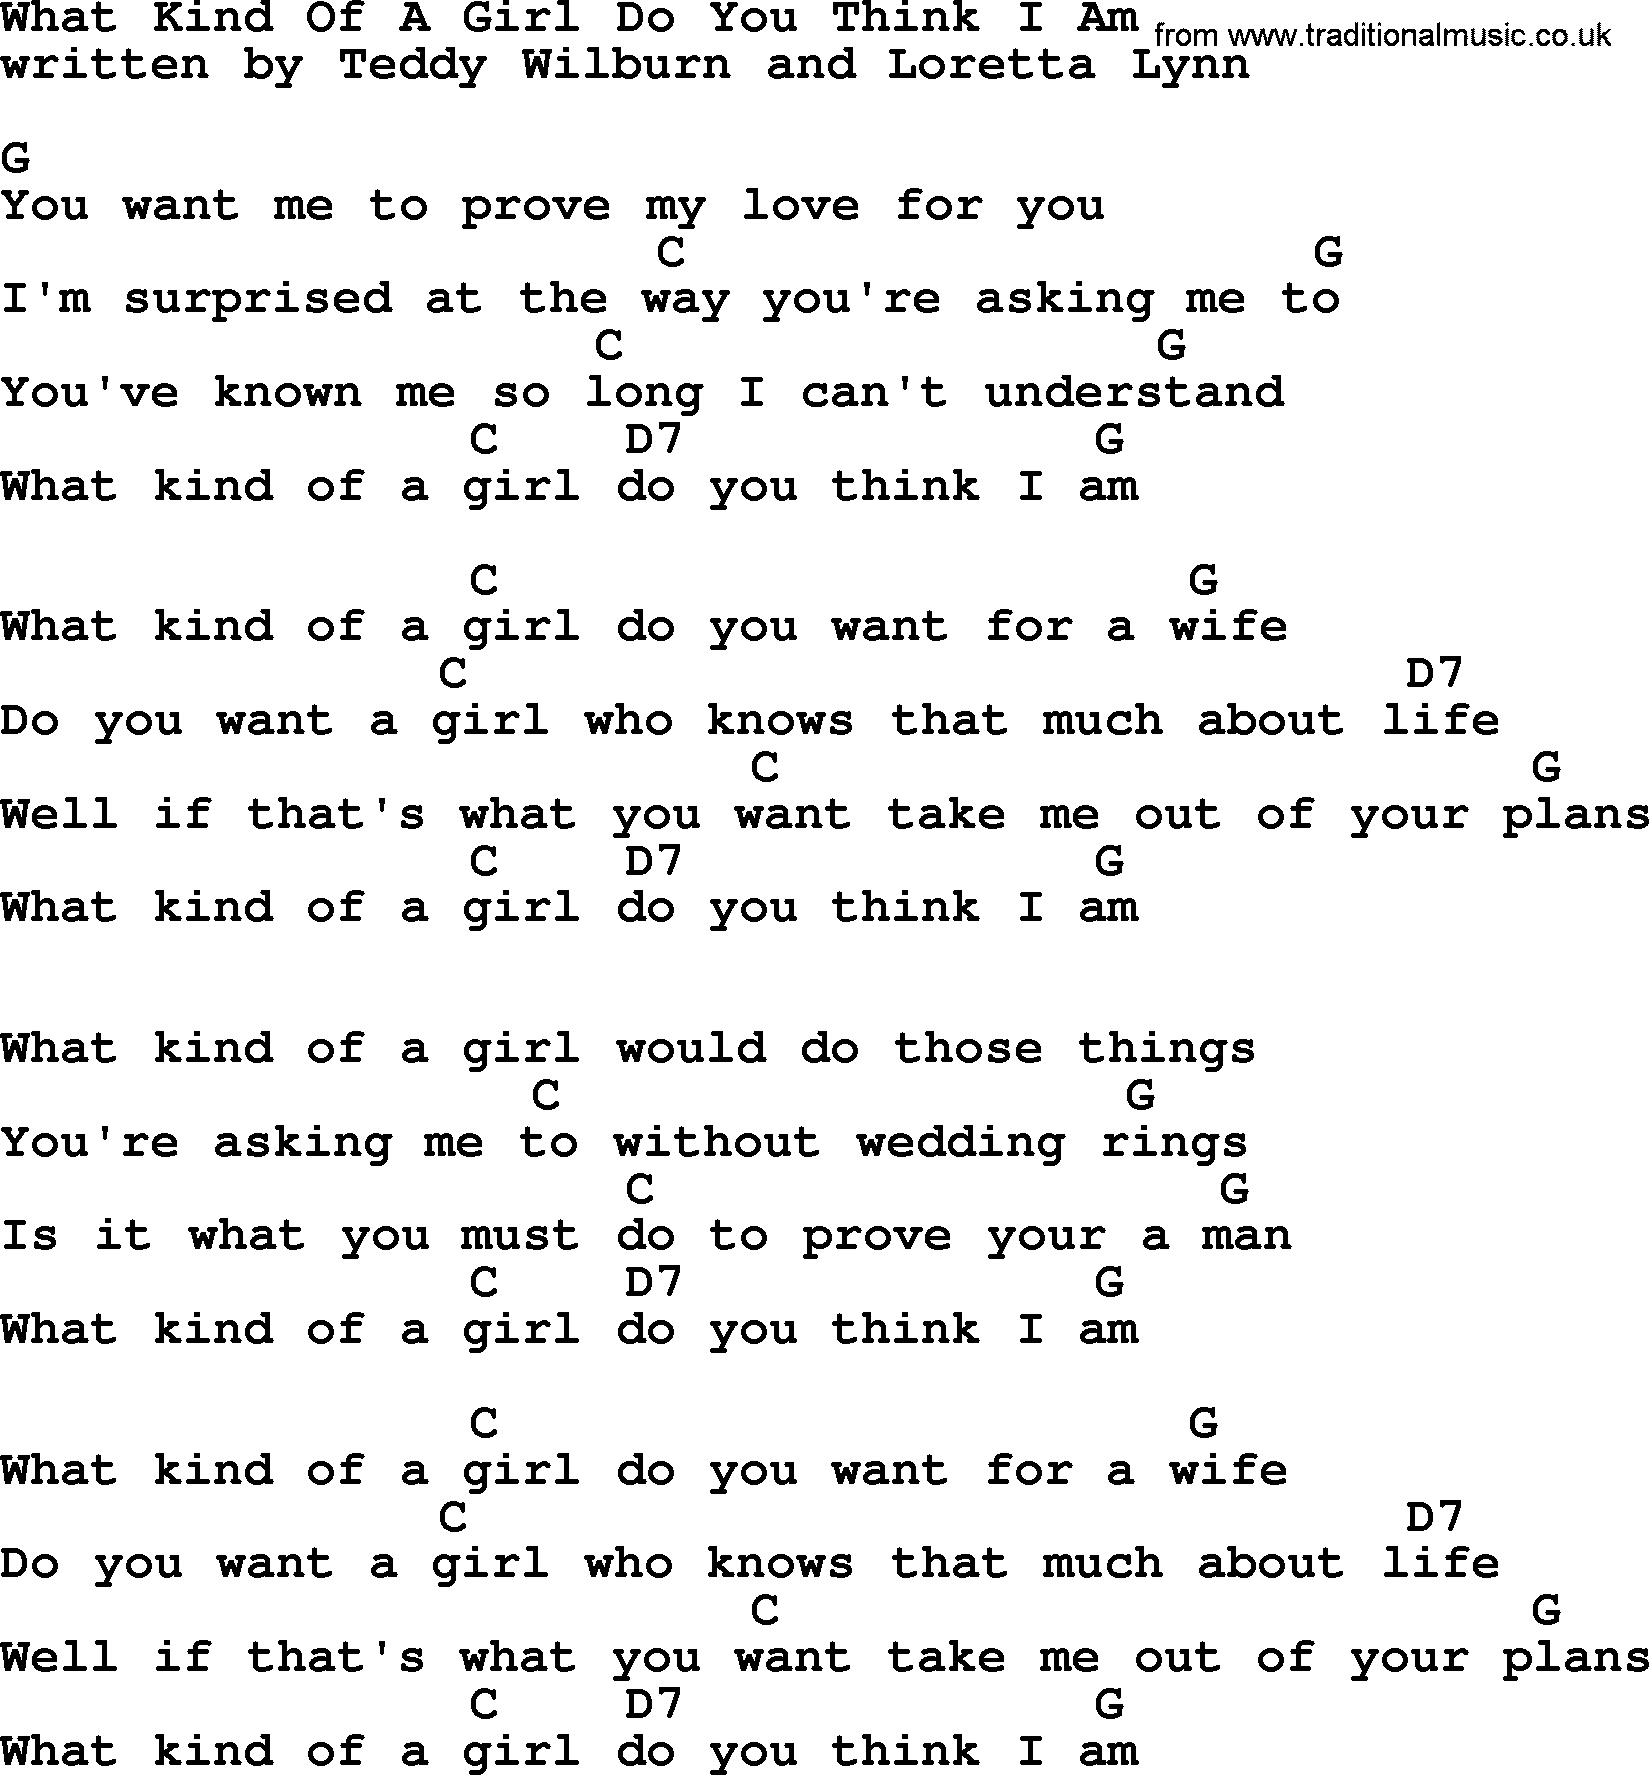 Loretta Lynn song: What Kind Of A Girl Do You Think I Am lyrics and chords